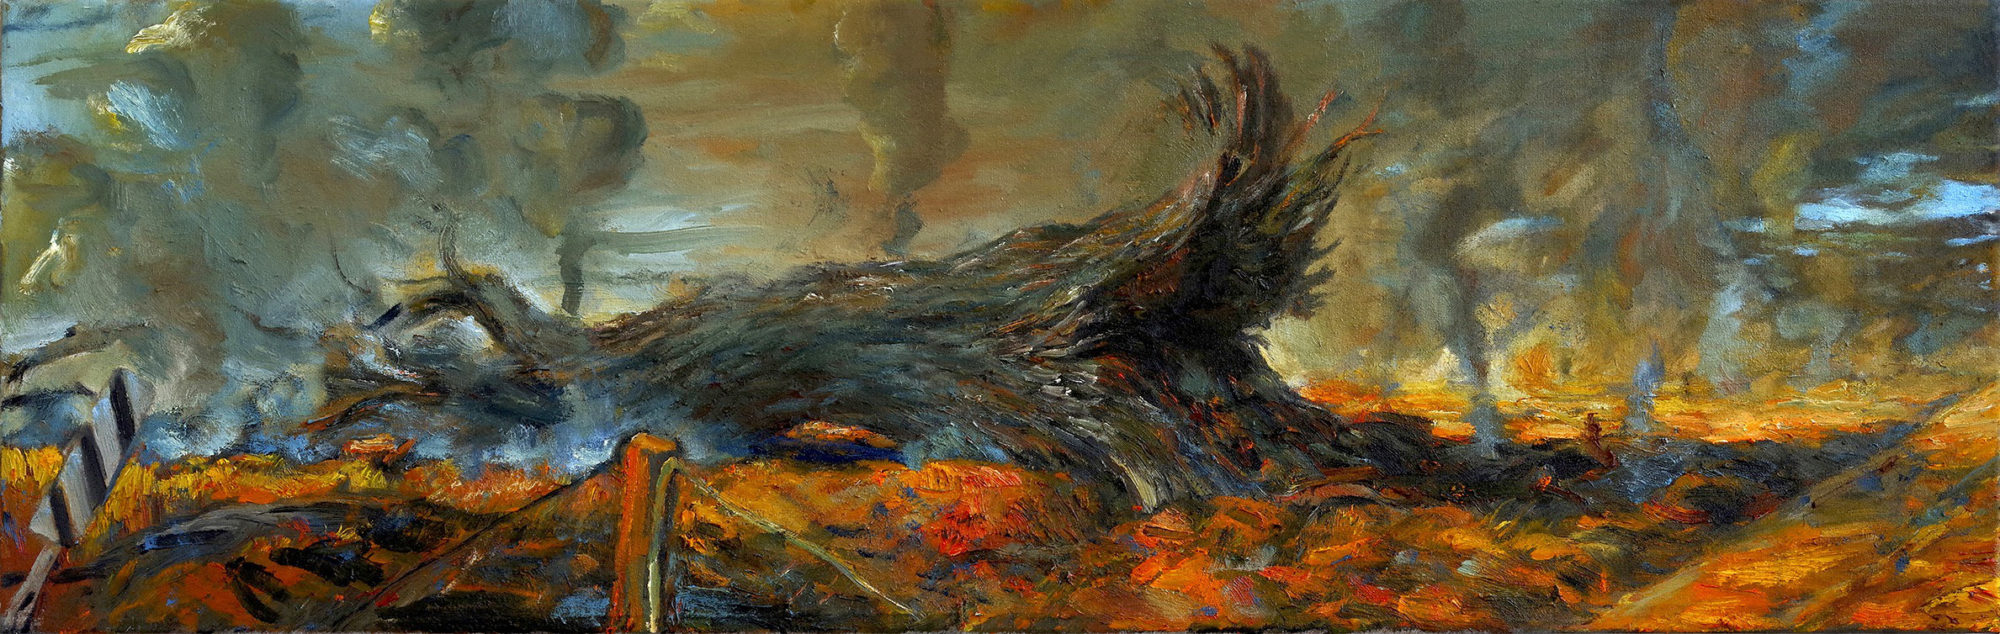 FireRoad [Lake Mungo] 2017 oil on canvas